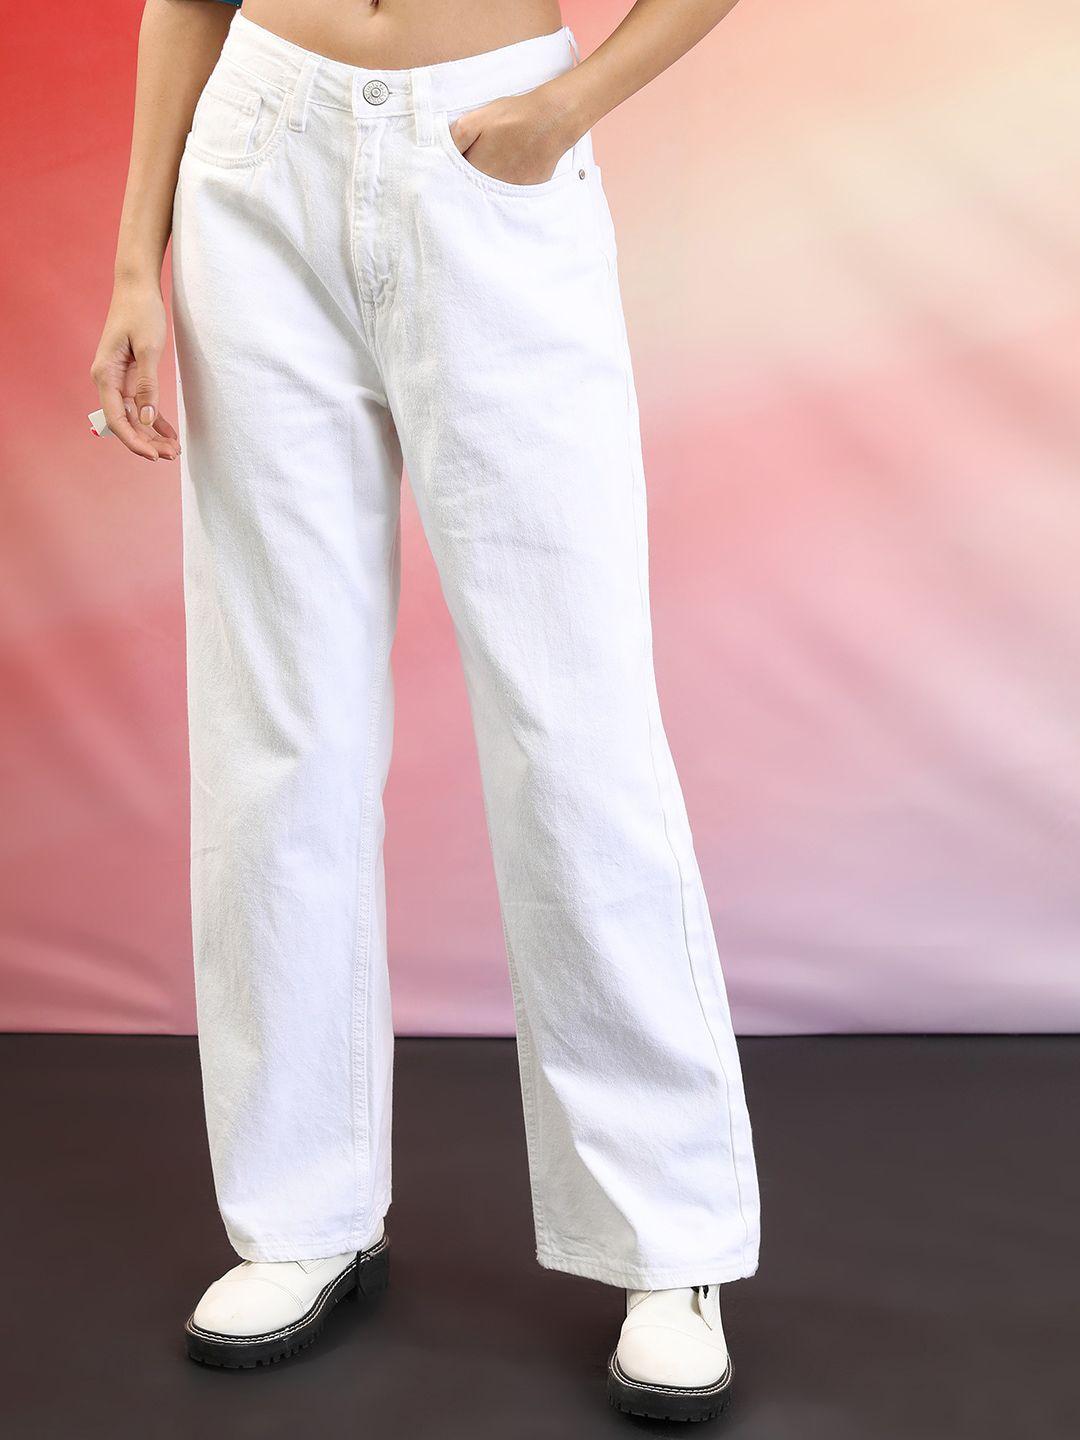 tokyo-talkies-women-white-wide-leg-mid-rise-stretchable-jeans